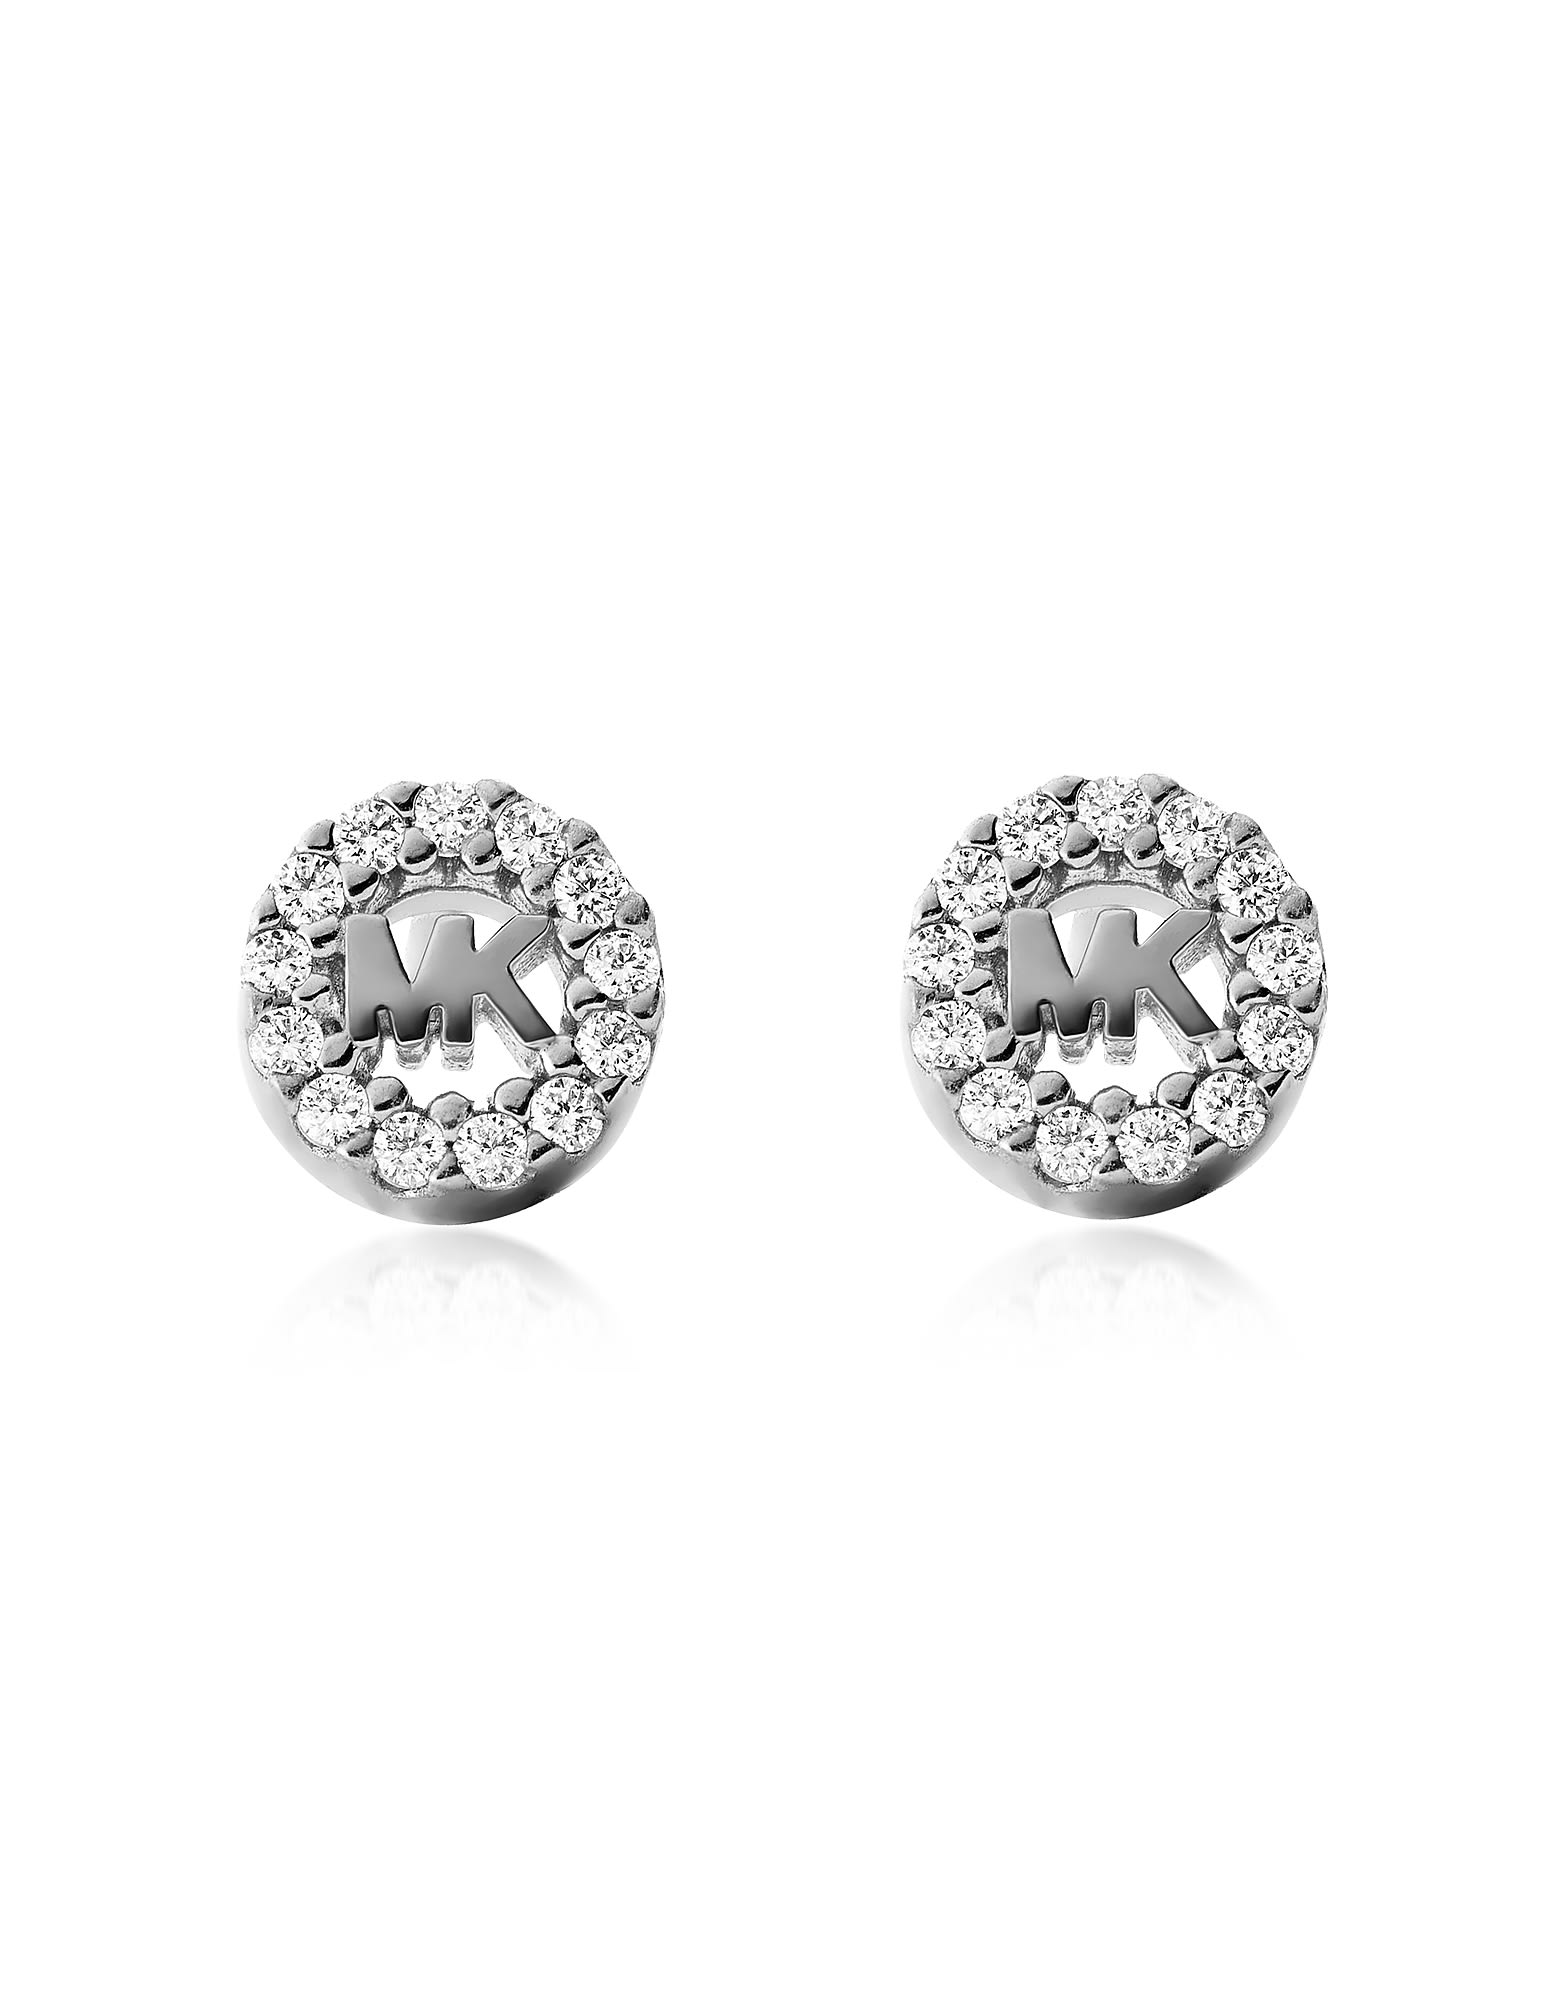 Michael Kors Stud Earrings 925 Sterling Silver Womens Earrings